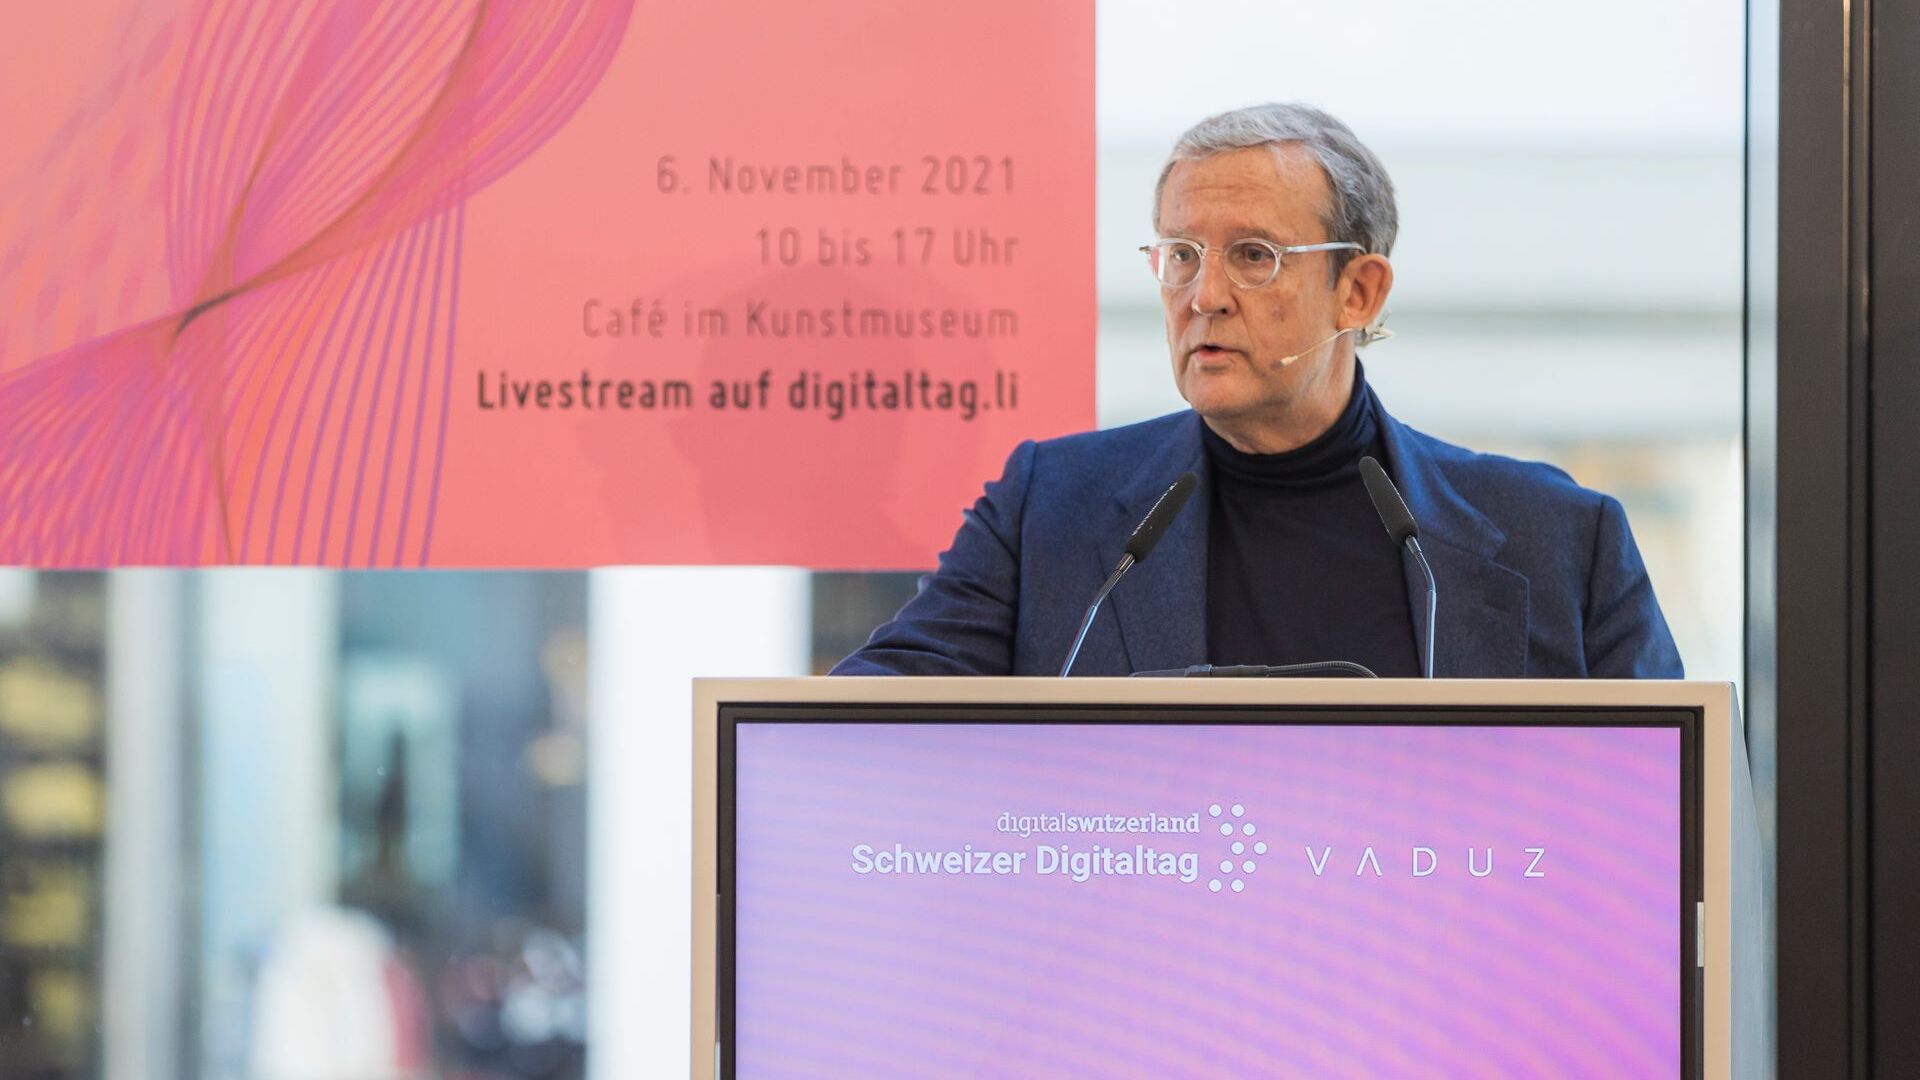 "Digitaltag Vaduz" მიესალმა ლიხტენშტეინის სამთავროს დედაქალაქის Kunstmuseum-მა შაბათს, 6 წლის 2021 ნოემბერს: ფრიც კაიზერის გამოსვლა, Kaiser Partner-ის თავმჯდომარე და მფლობელი.